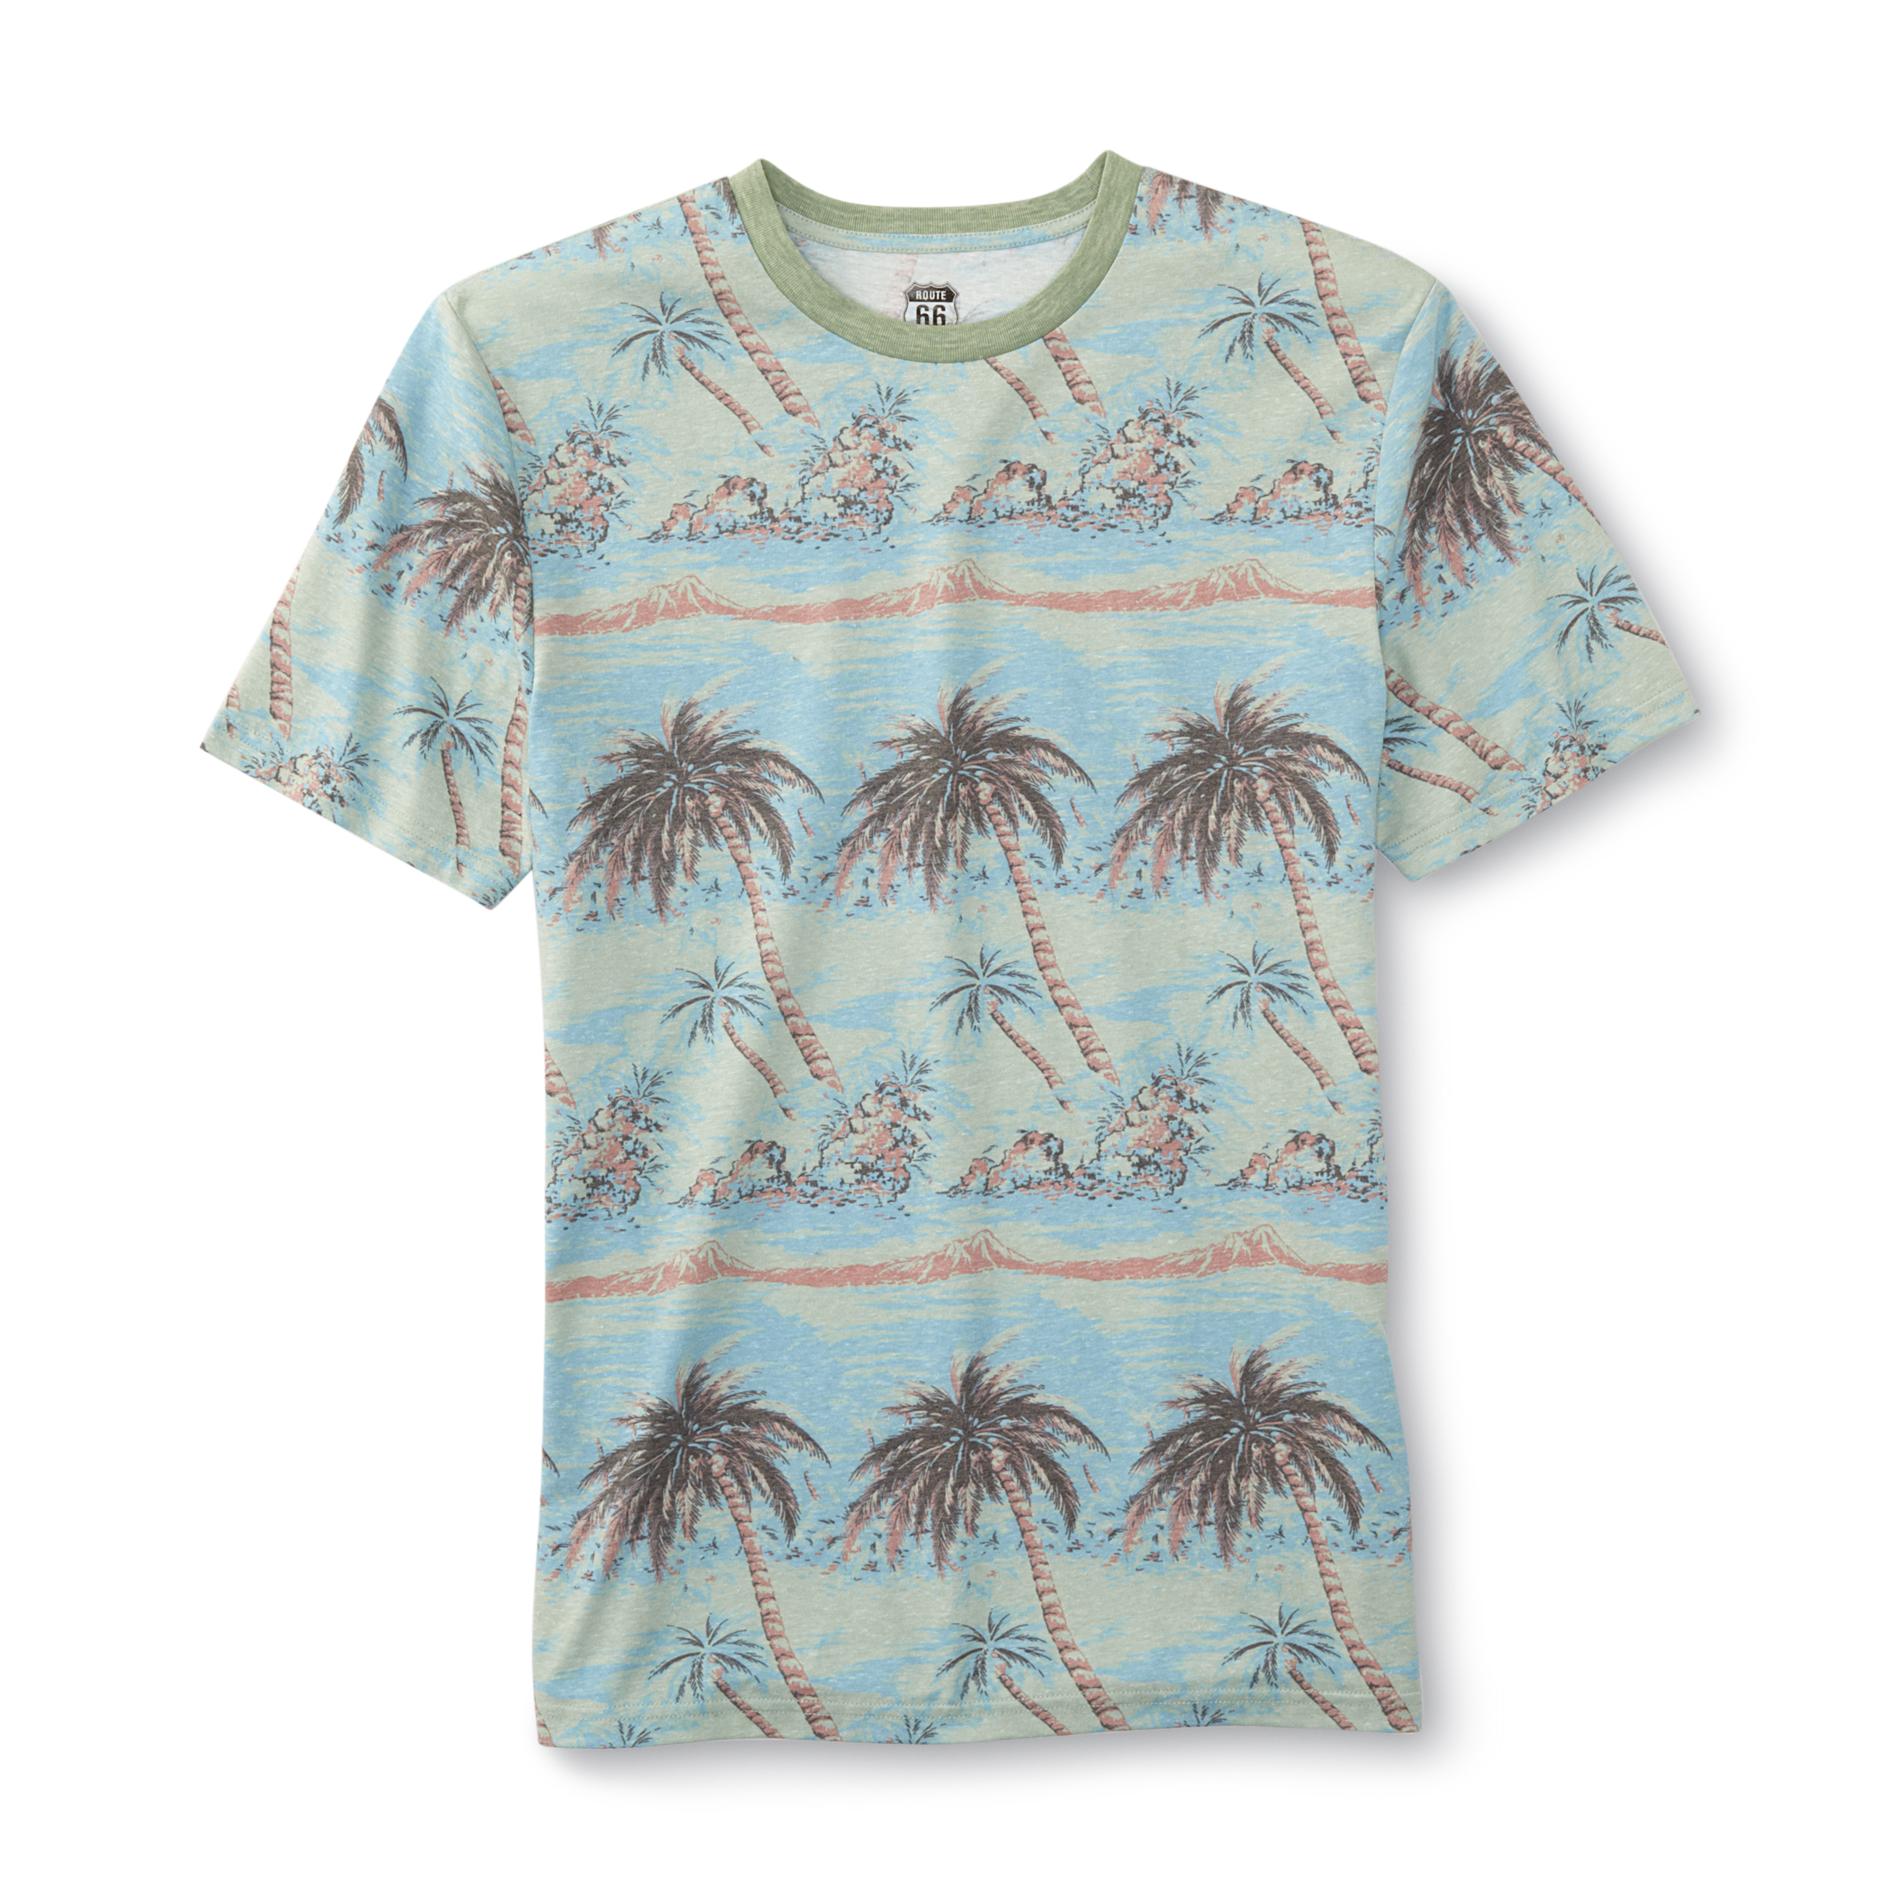 Route 66 Men's Graphic T-Shirt - Palm Trees